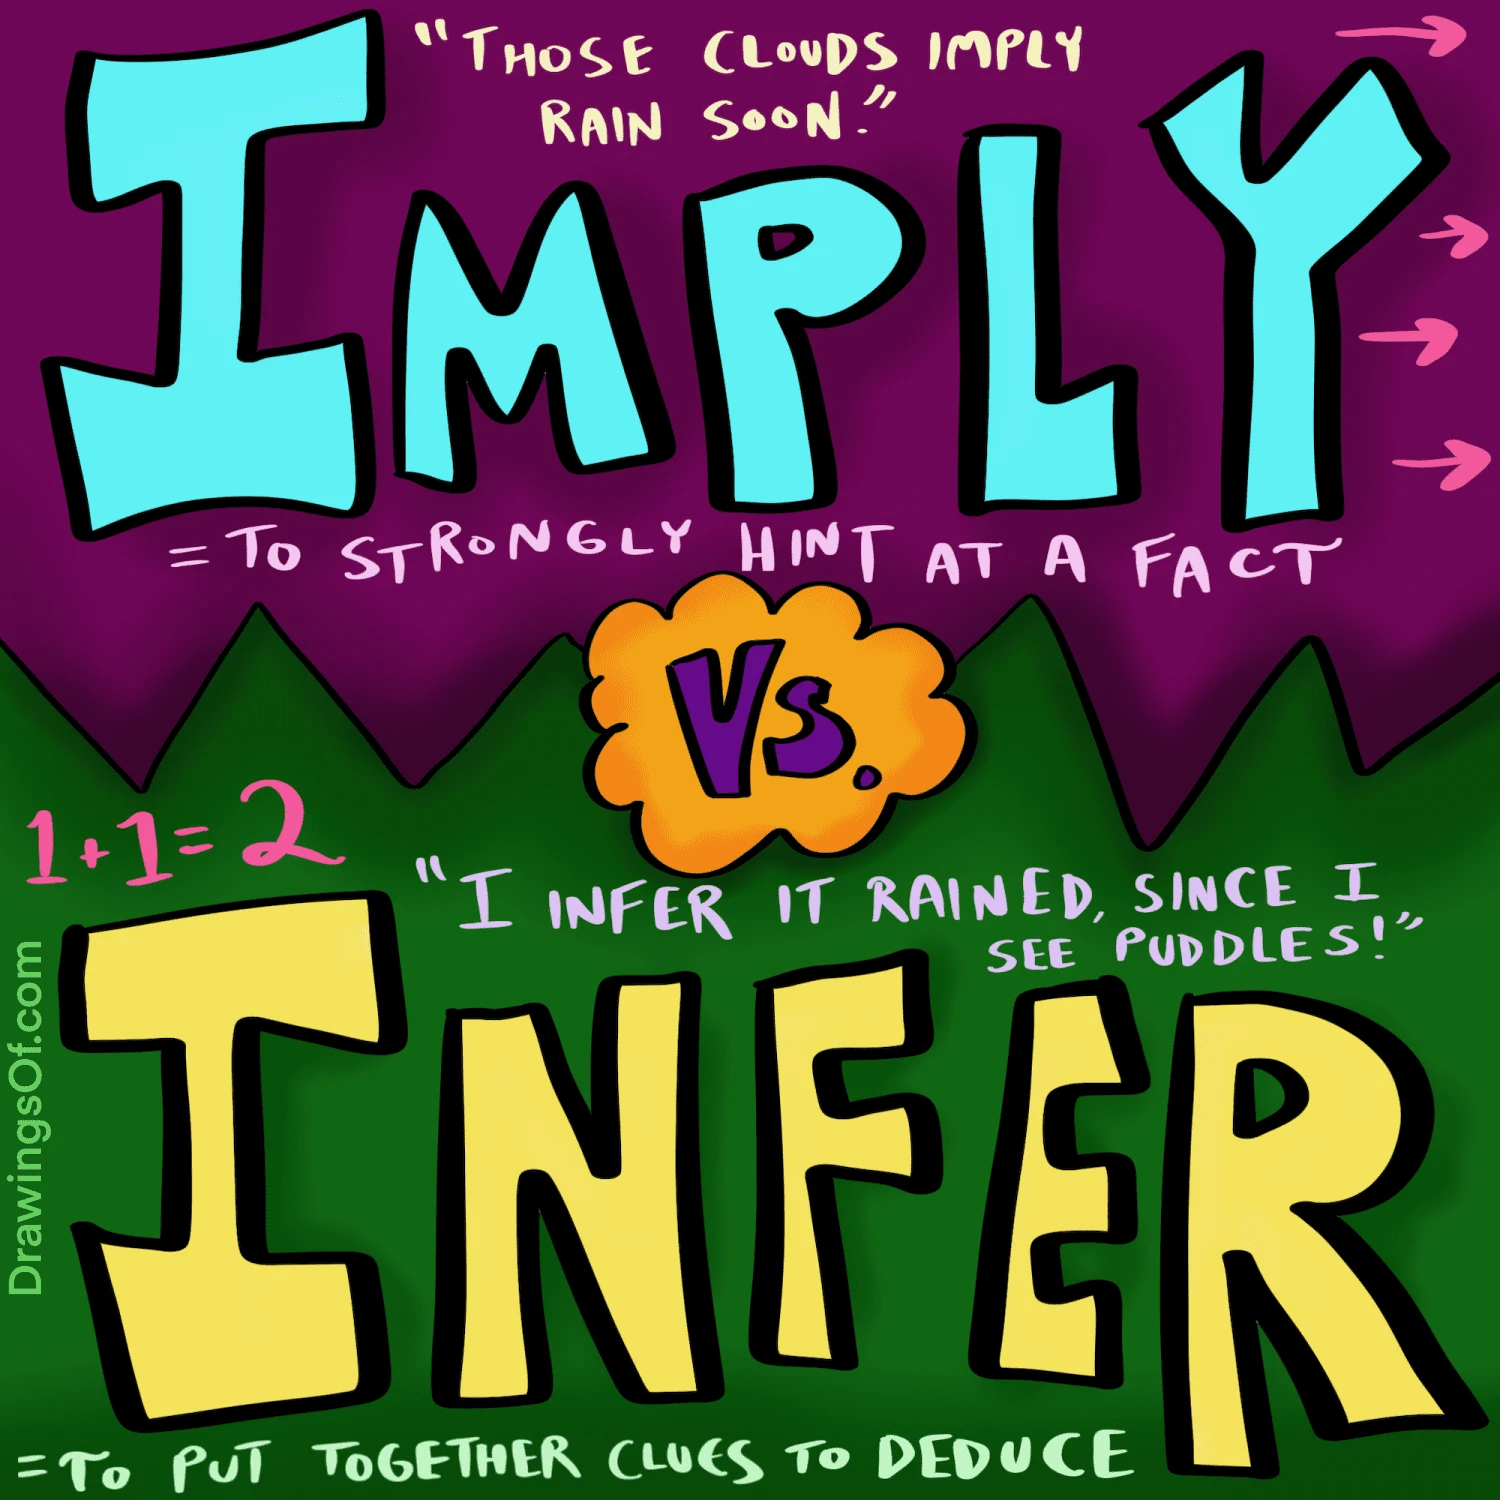 Imply vs. Infer